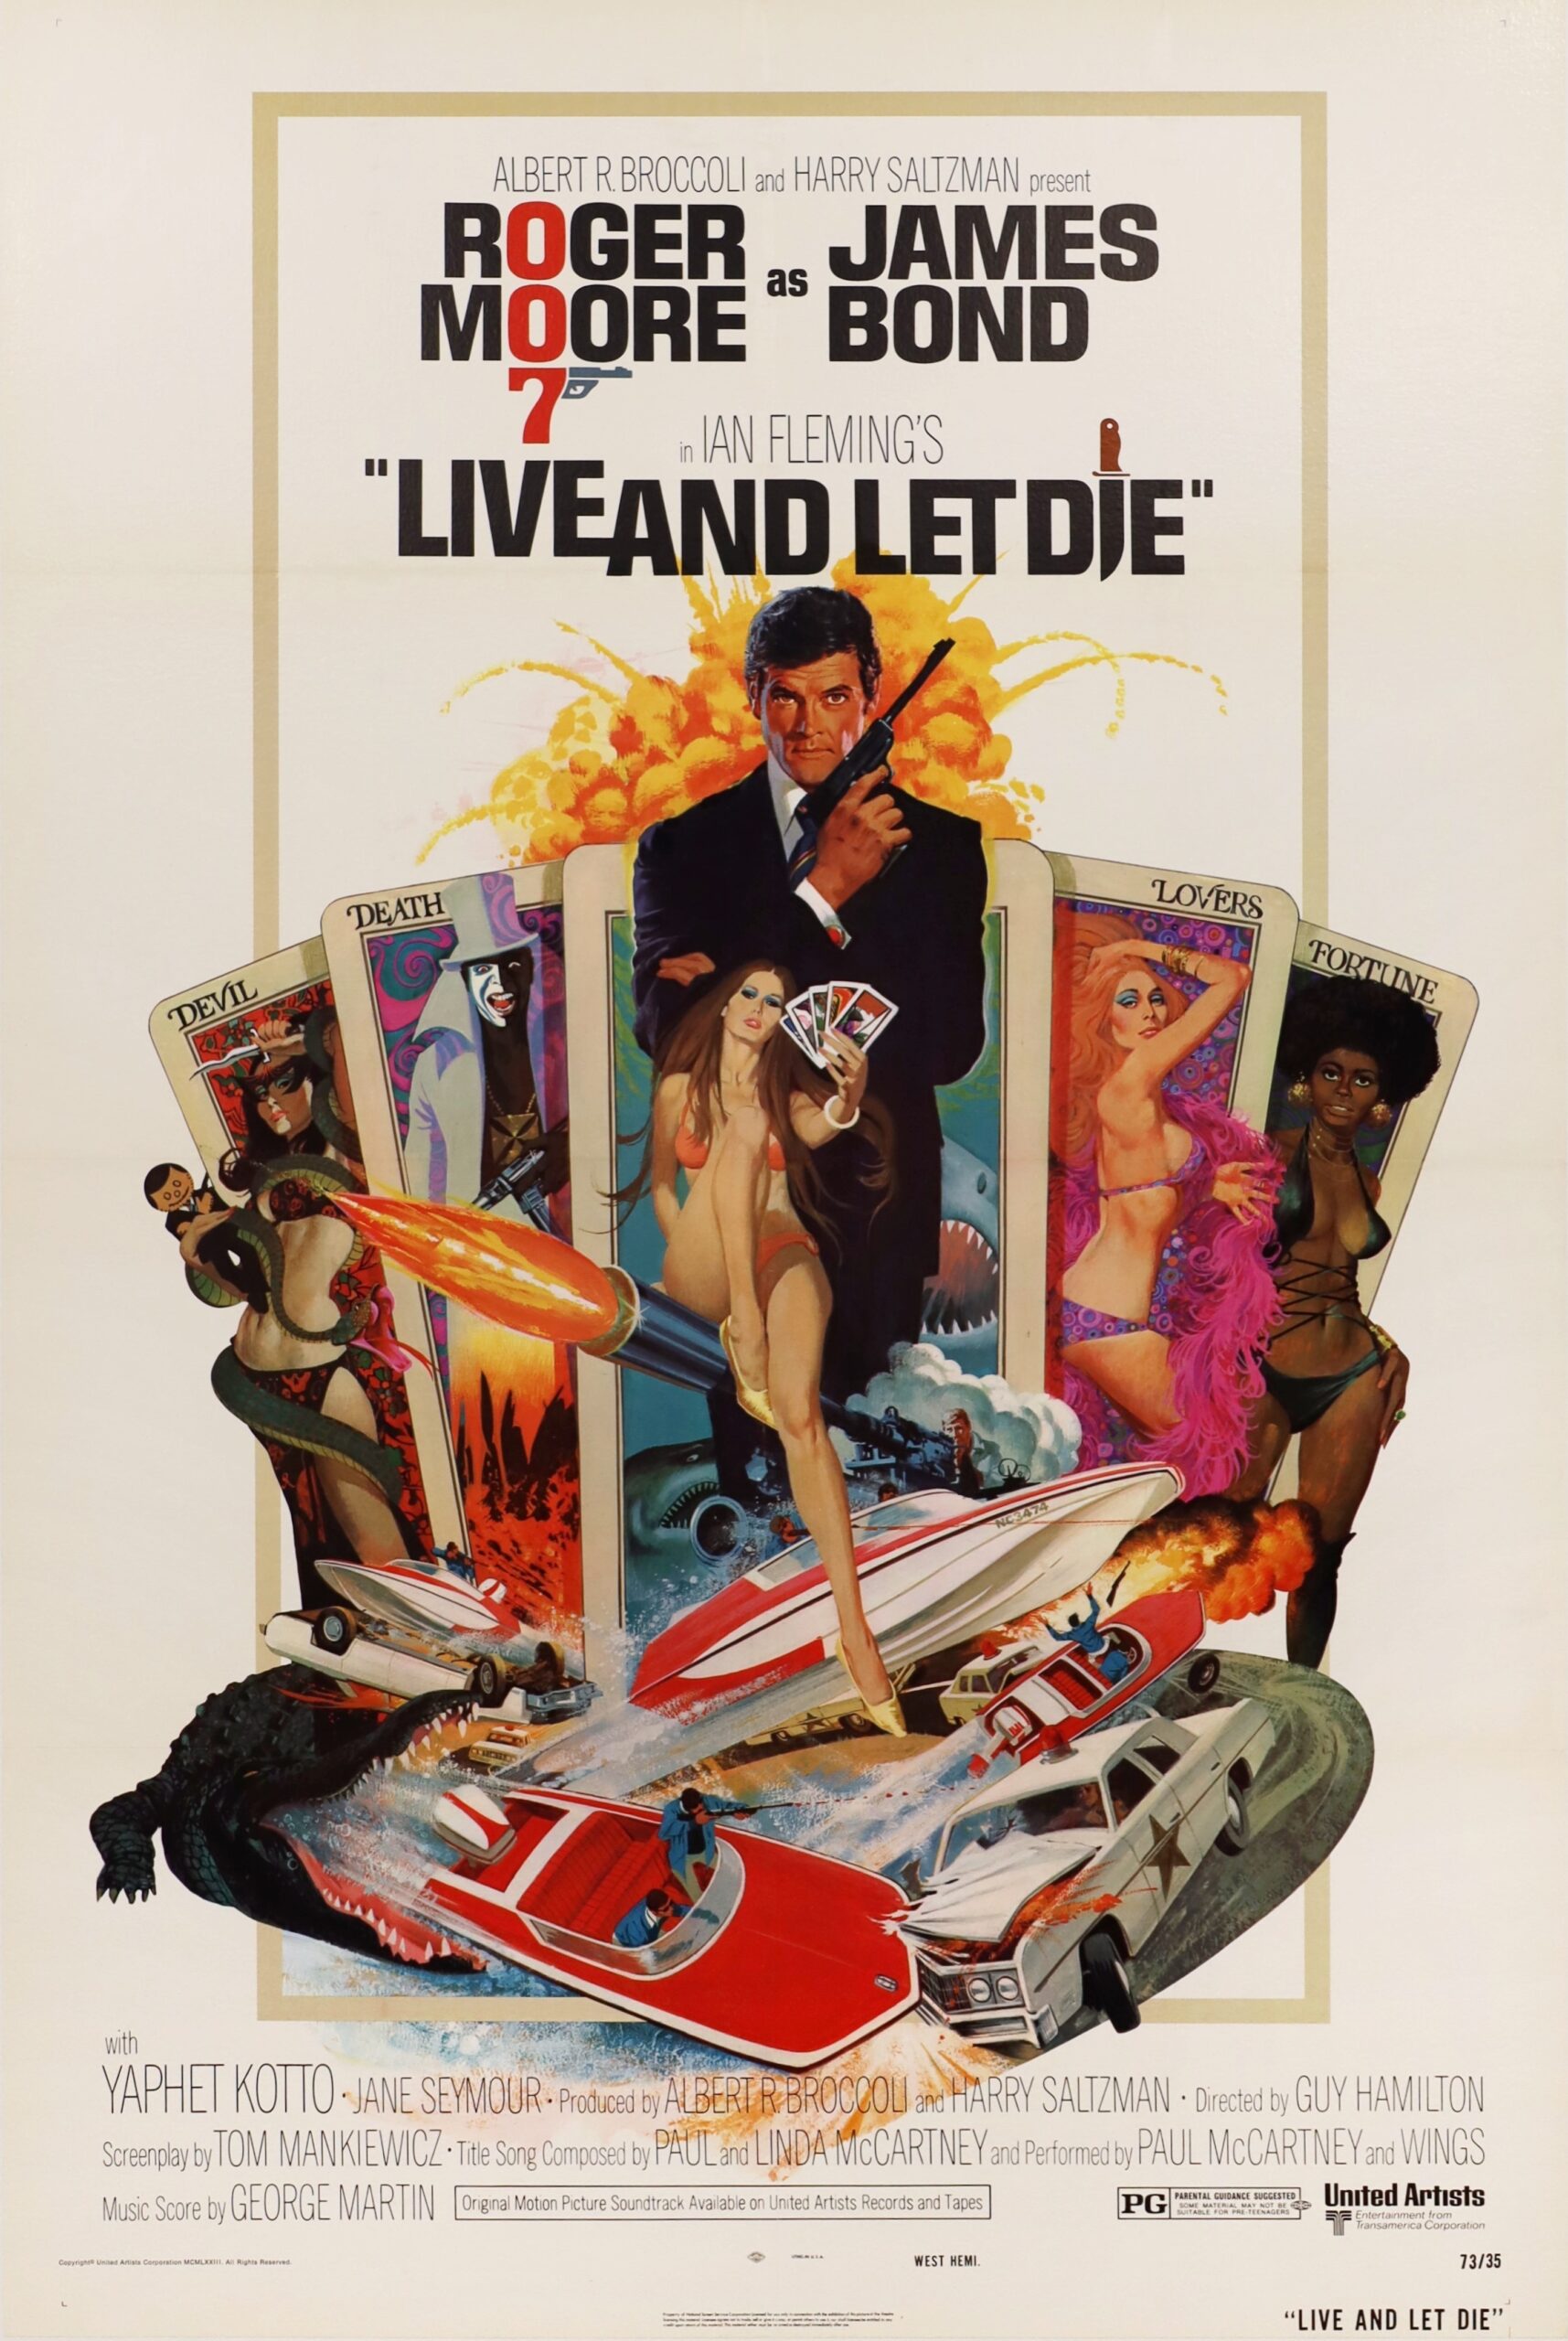 Original vintage cinema movie poster for Roger Moore in James Bond 007 outing Live and Let Die